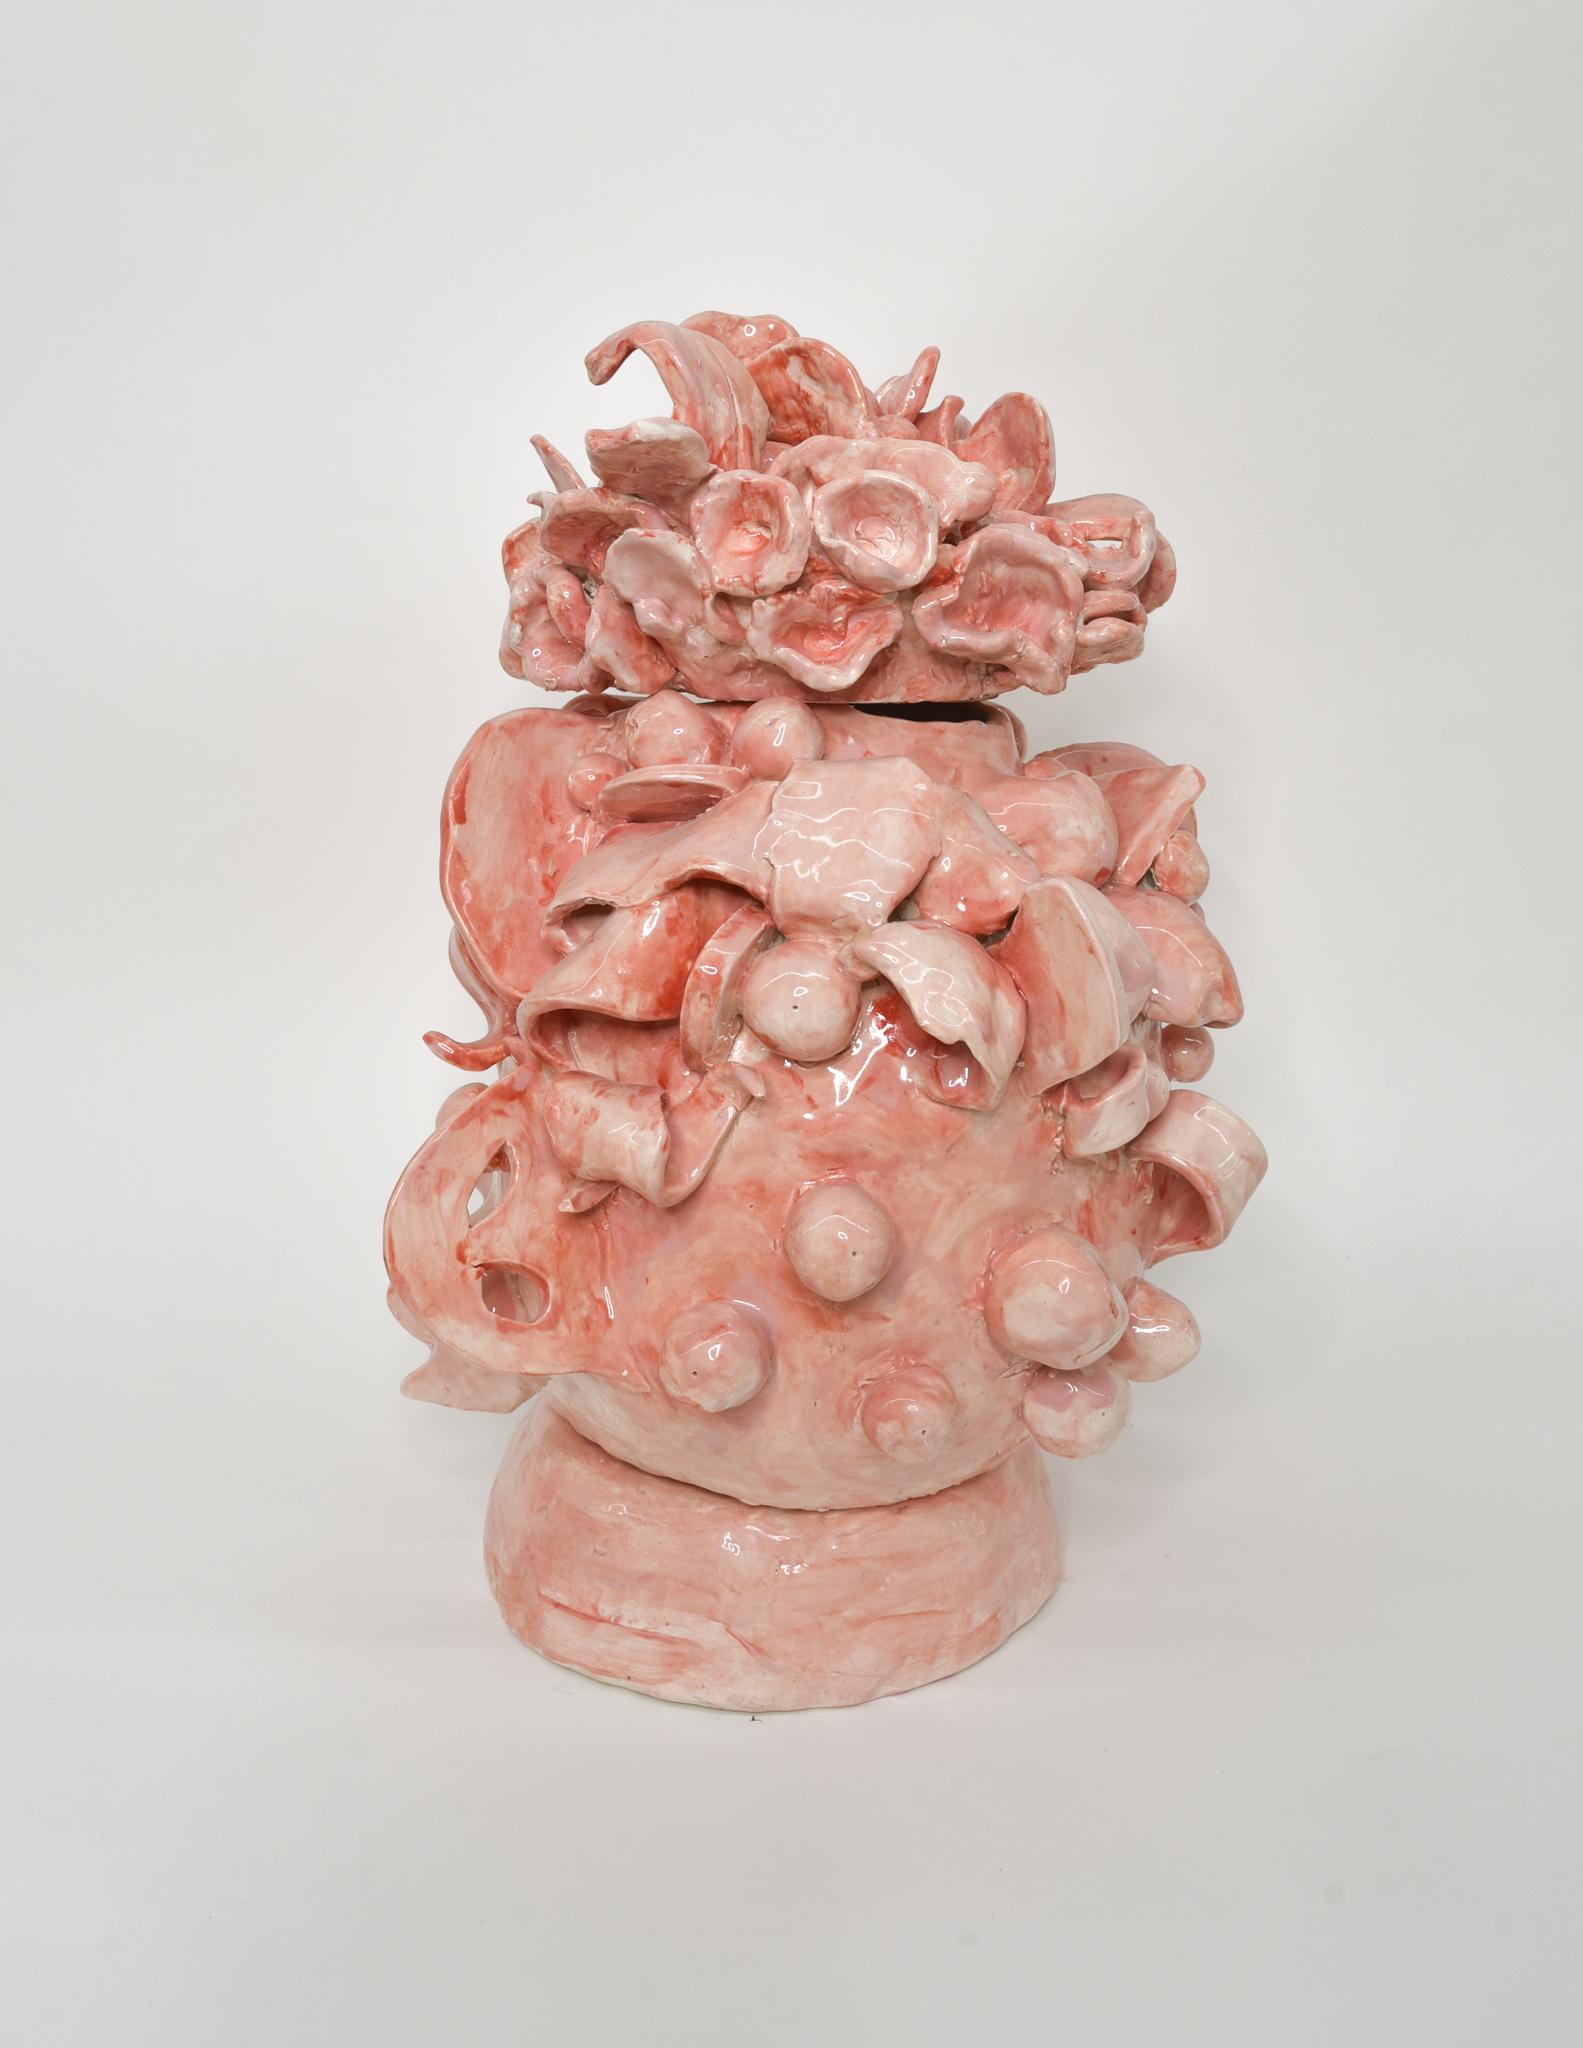 Untitled VII. Glazed ceramic abstract jar  sculpture - Sculpture by Charo Oquet